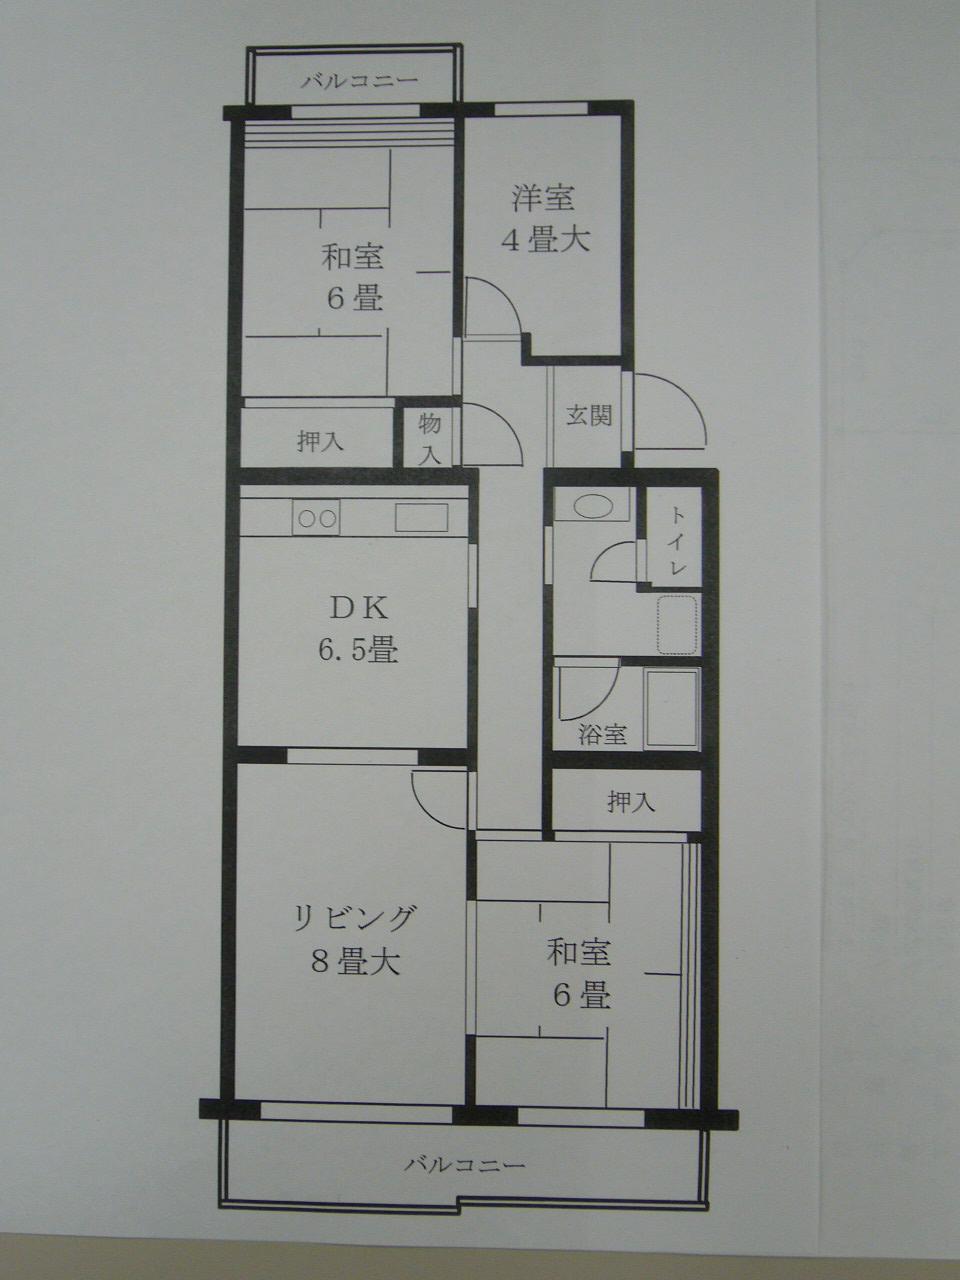 Floor plan. 3LDK, Price 18,800,000 yen, Occupied area 77.36 sq m , Balcony area 11.82 sq m